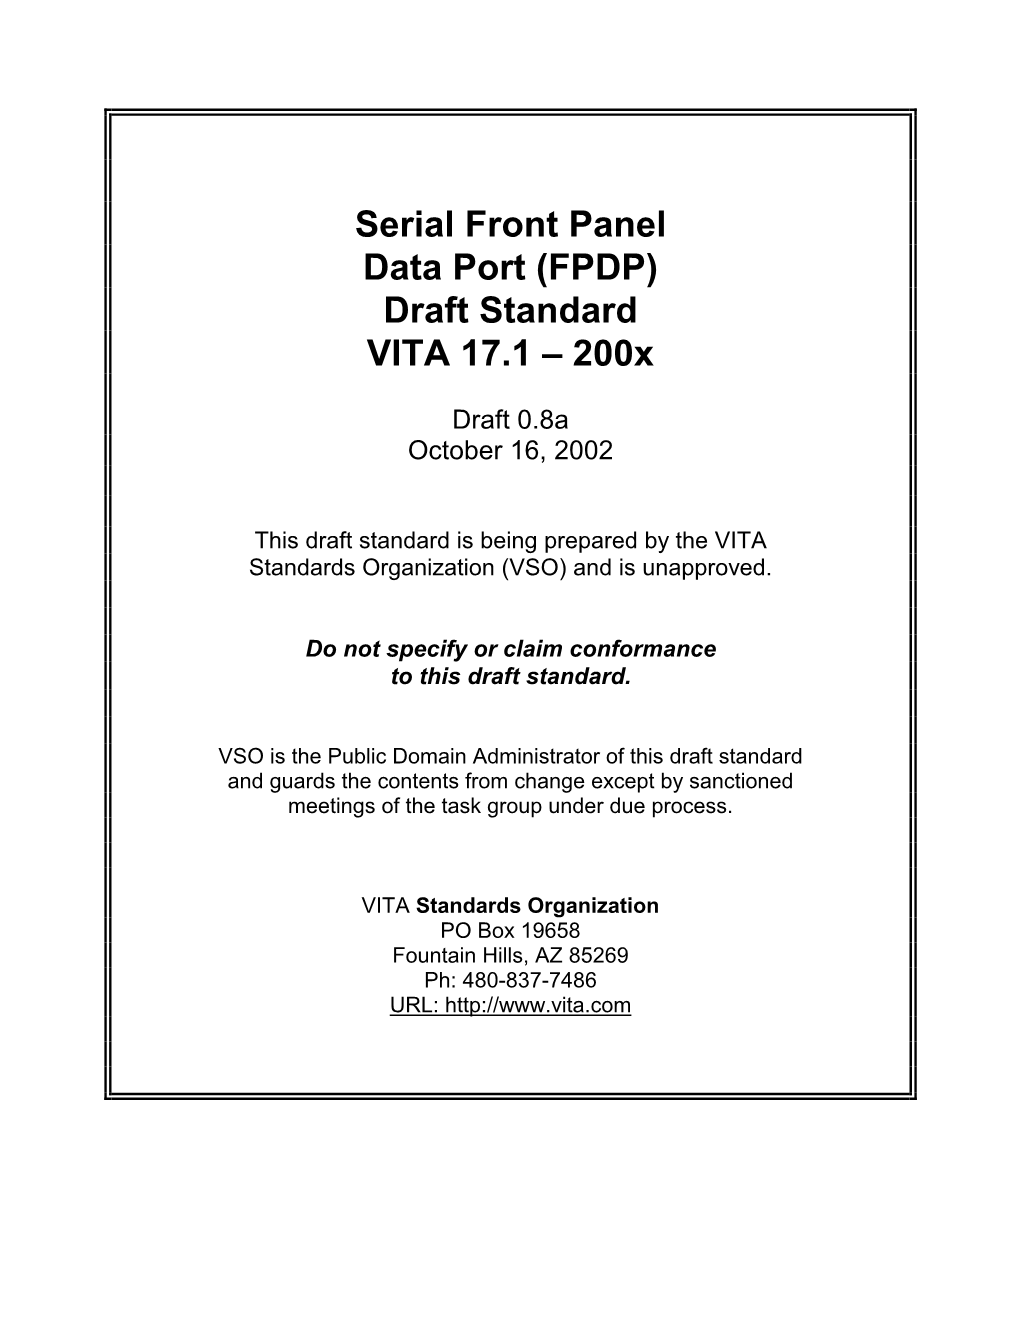 Serial Front Panel Data Port (FPDP) Draft Standard VITA 17.1 – 200X